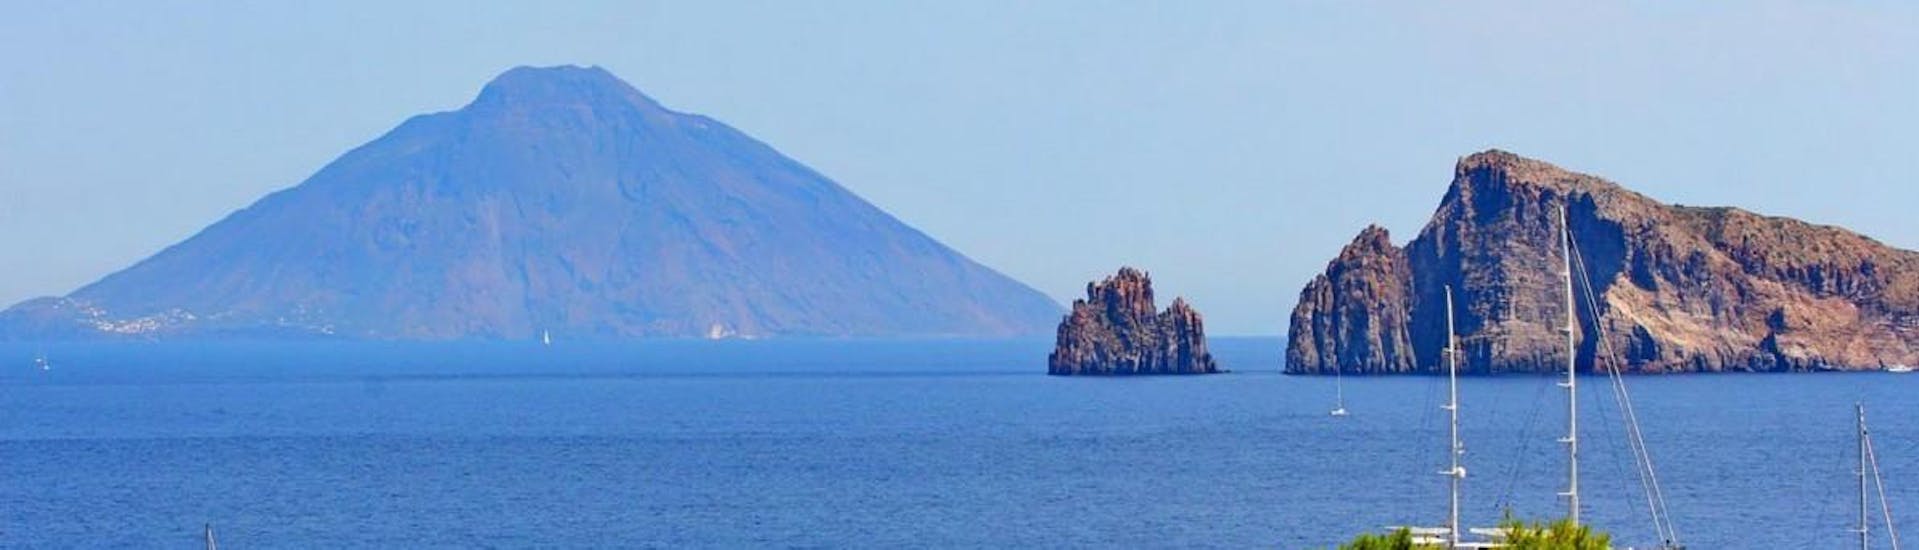 Picture of the Aeolian Islands taken during a boat trip from Tripodi Navigazione Tropea.